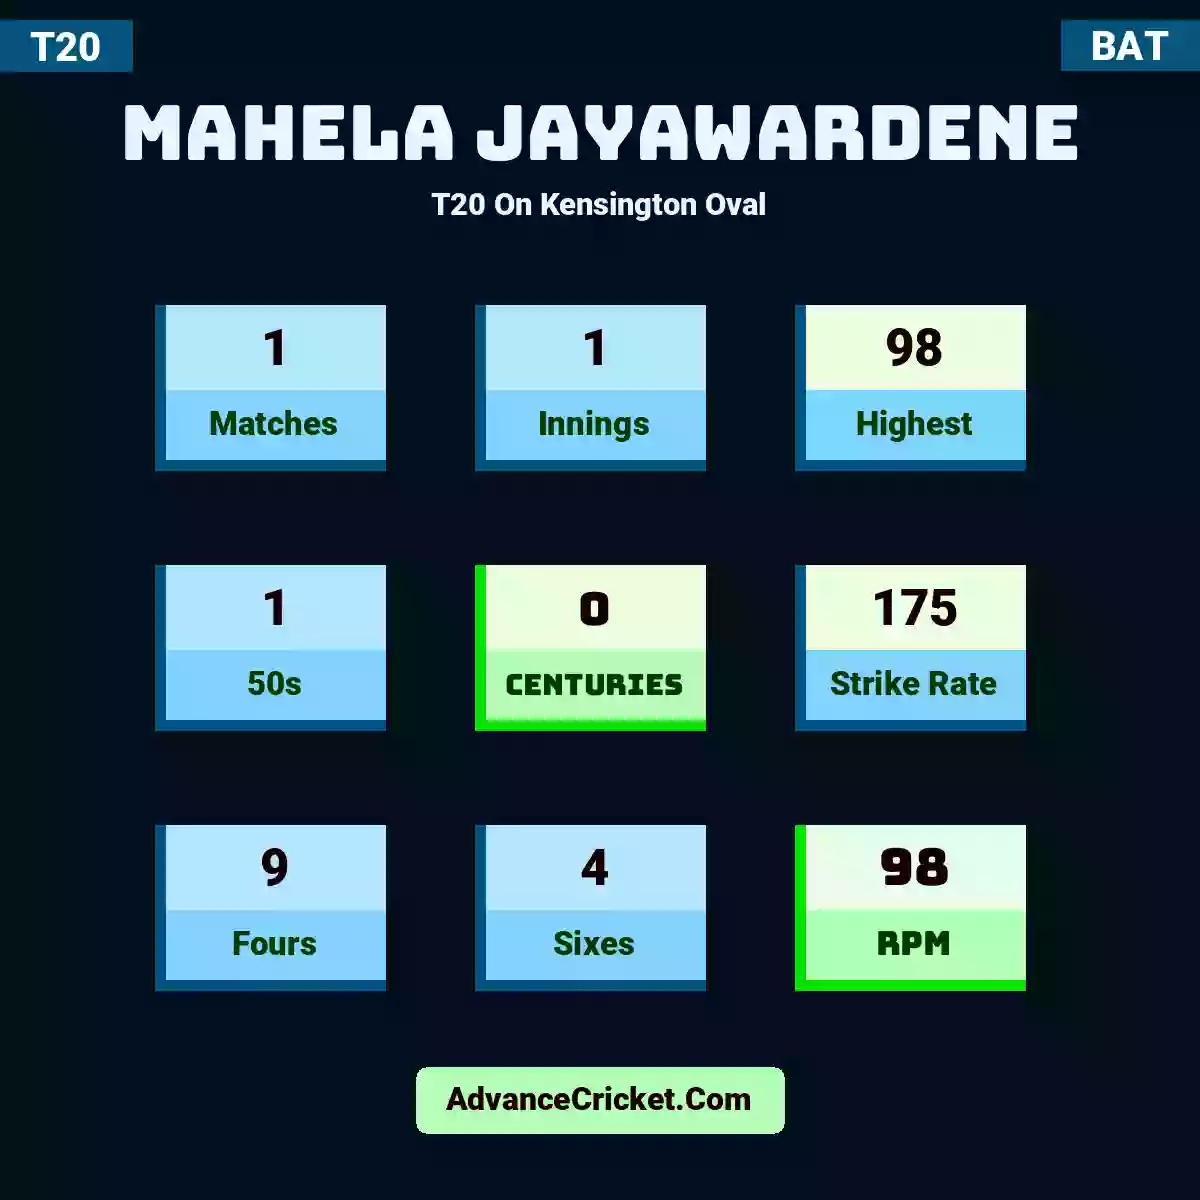 Mahela Jayawardene T20  On Kensington Oval, Mahela Jayawardene played 1 matches, scored 98 runs as highest, 1 half-centuries, and 0 centuries, with a strike rate of 175. M.Jayawardene hit 9 fours and 4 sixes, with an RPM of 98.